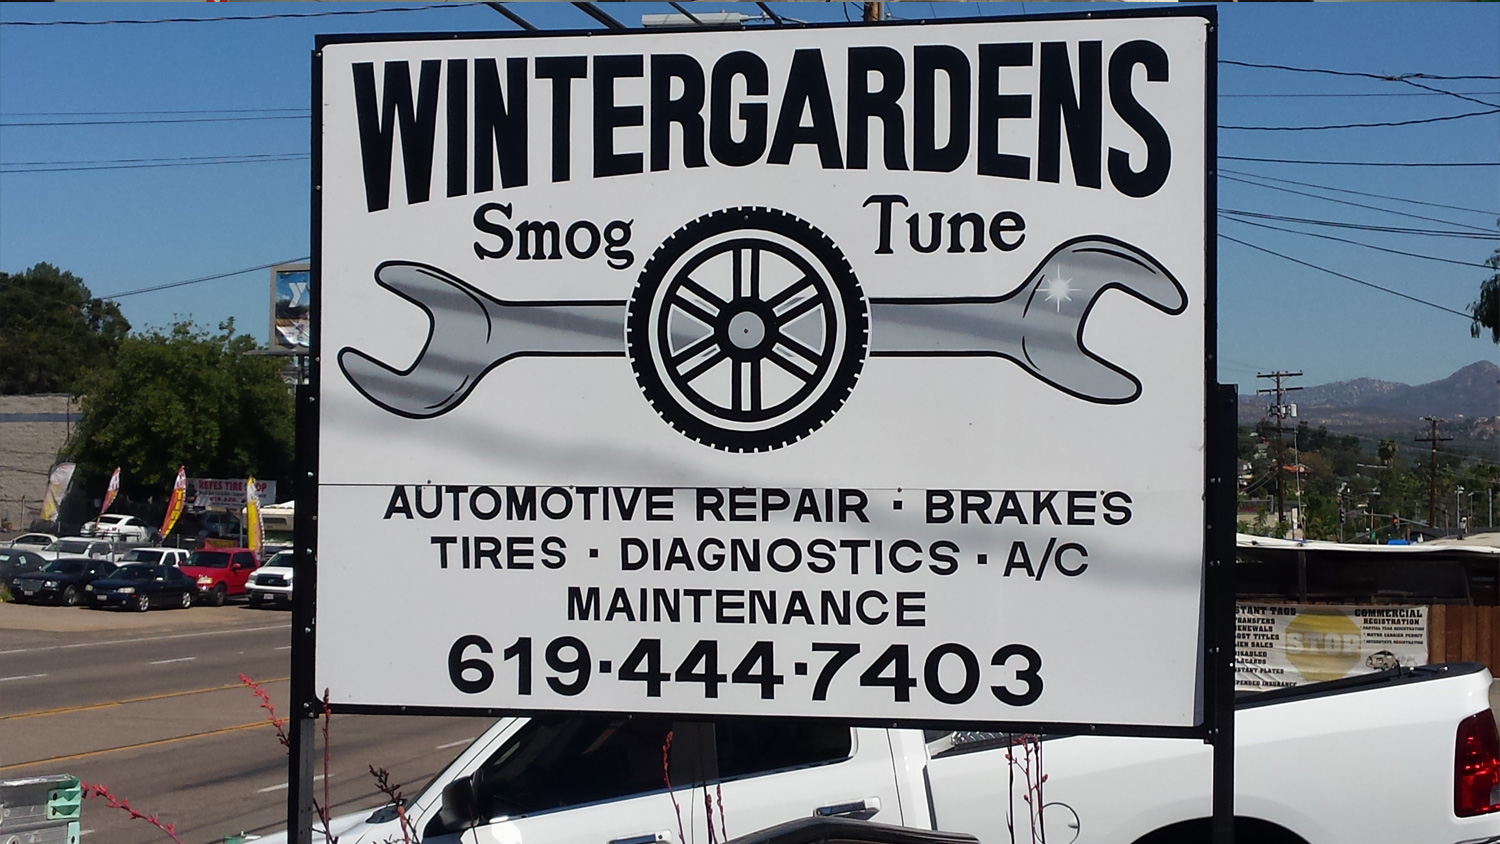 Wintergardens Smog & Tune Sign